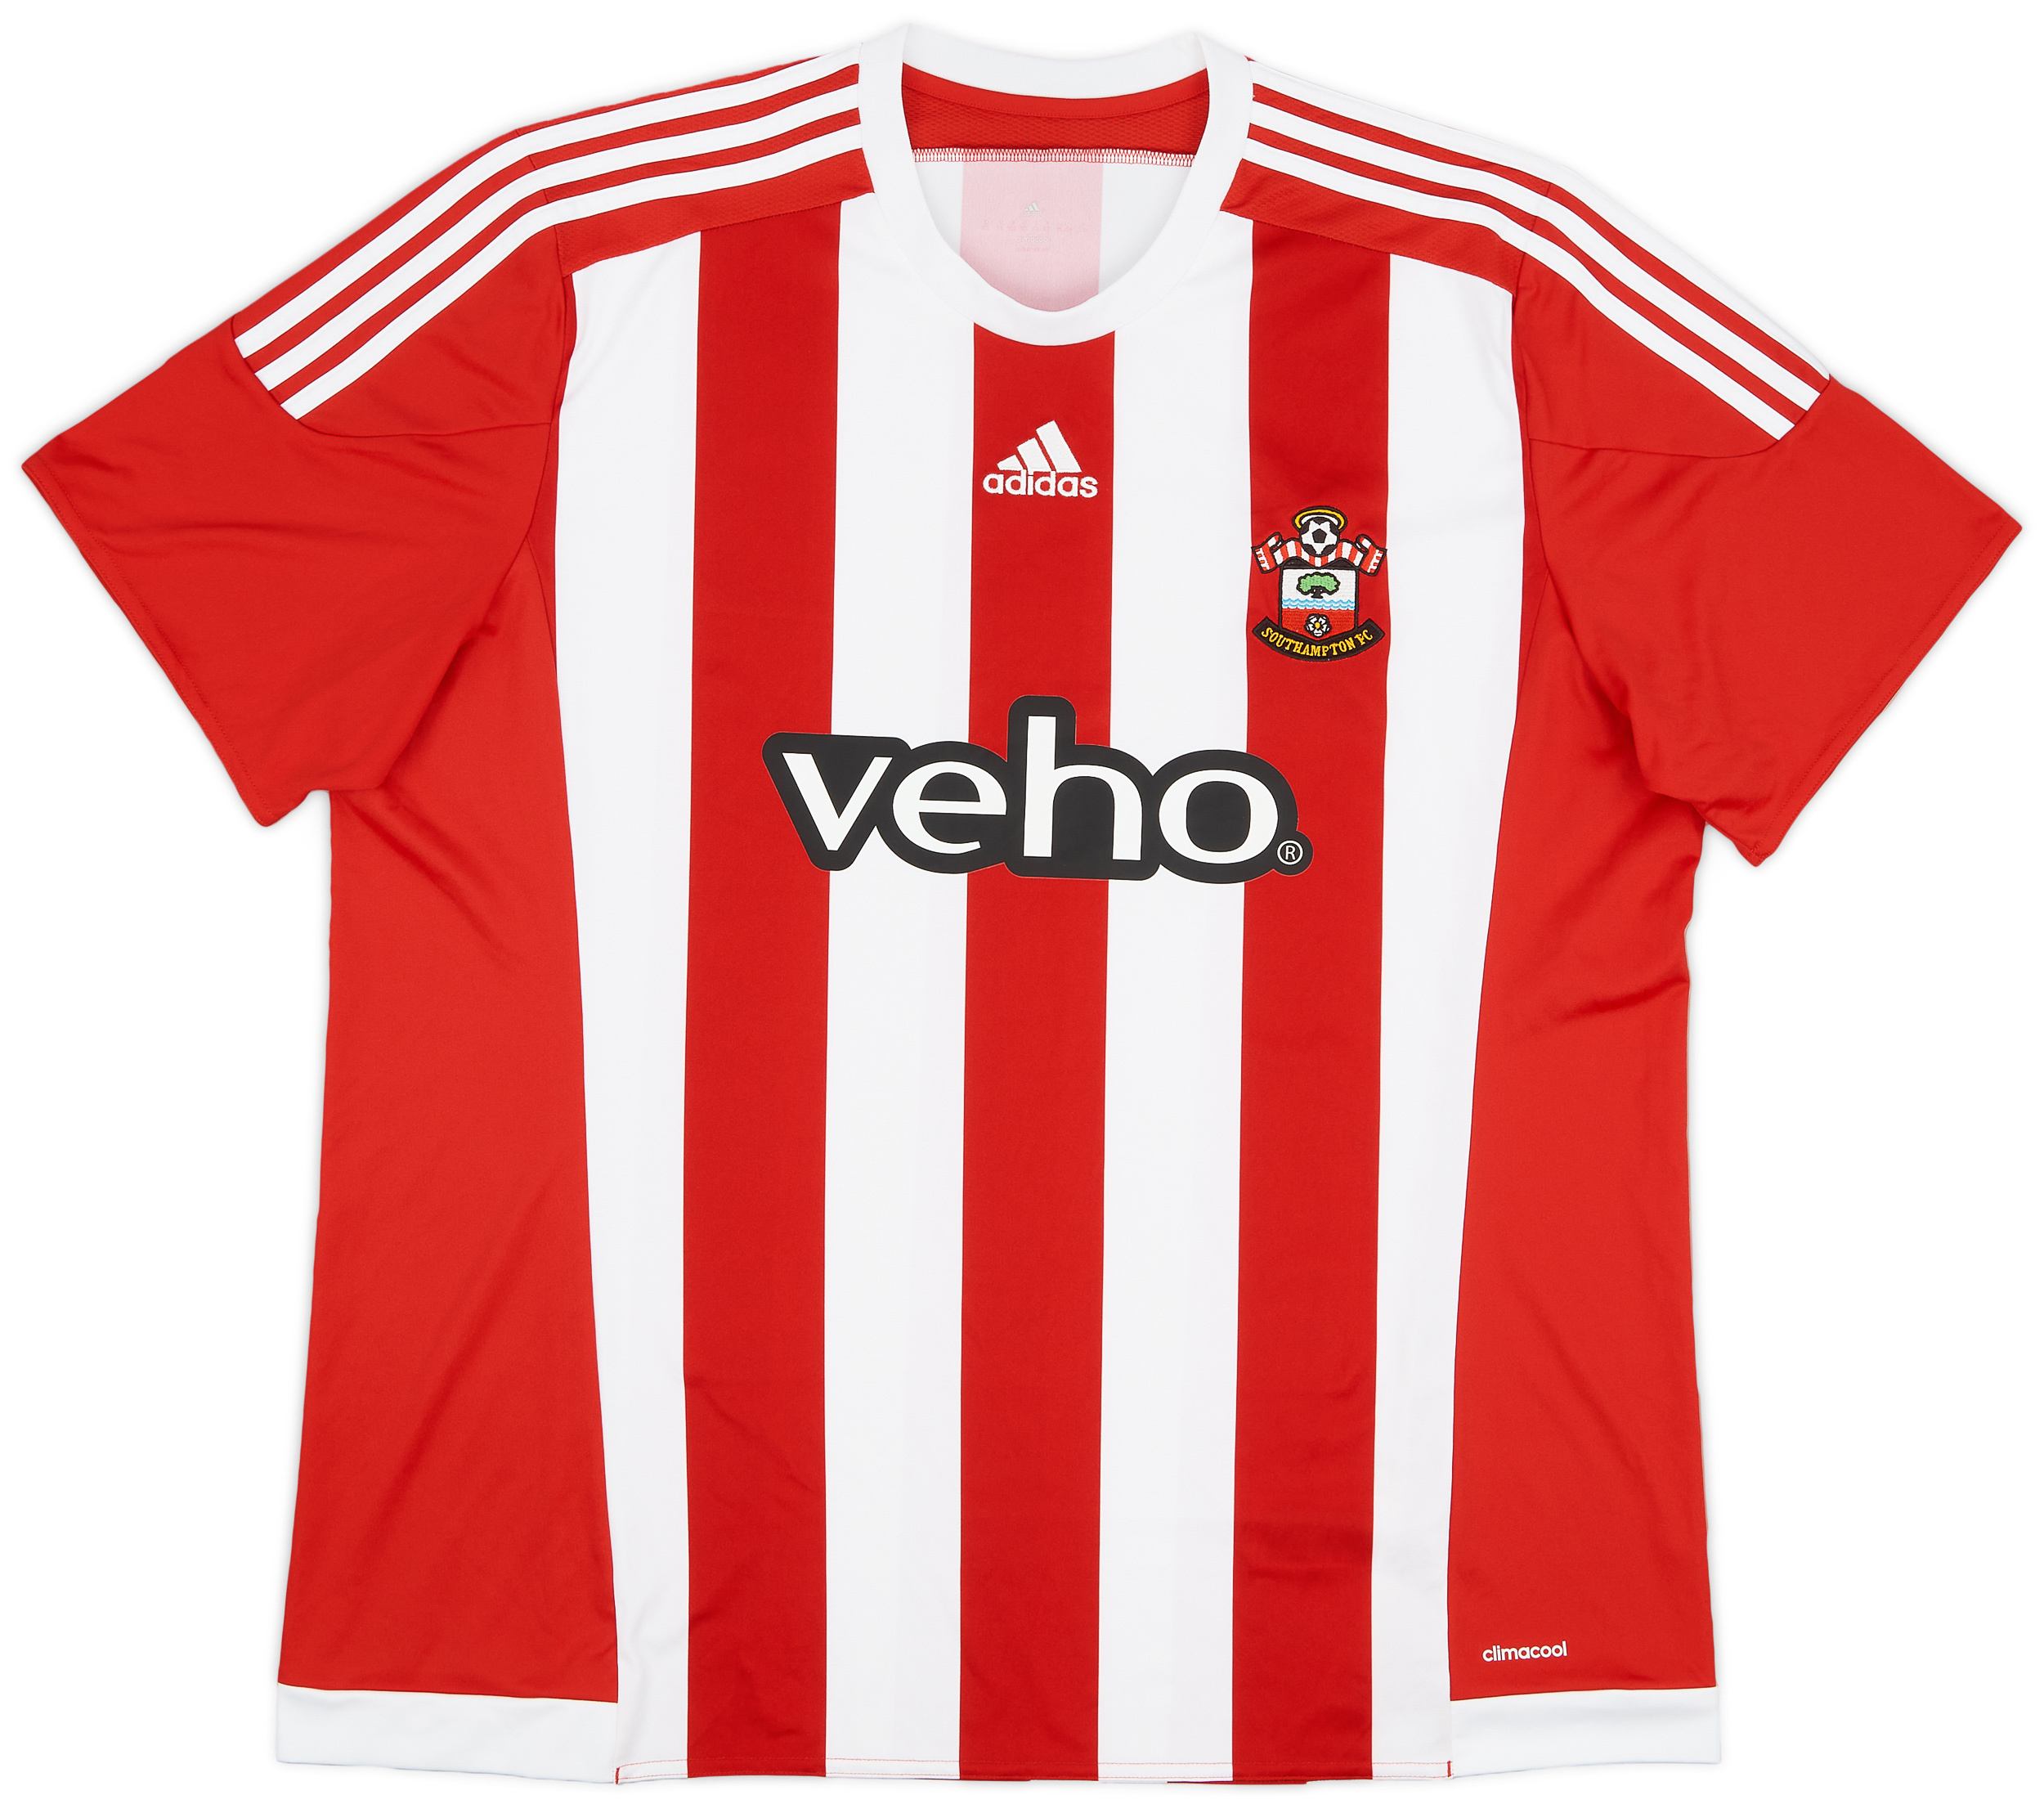 2015-16 Southampton Home Shirt - 9/10 - ()